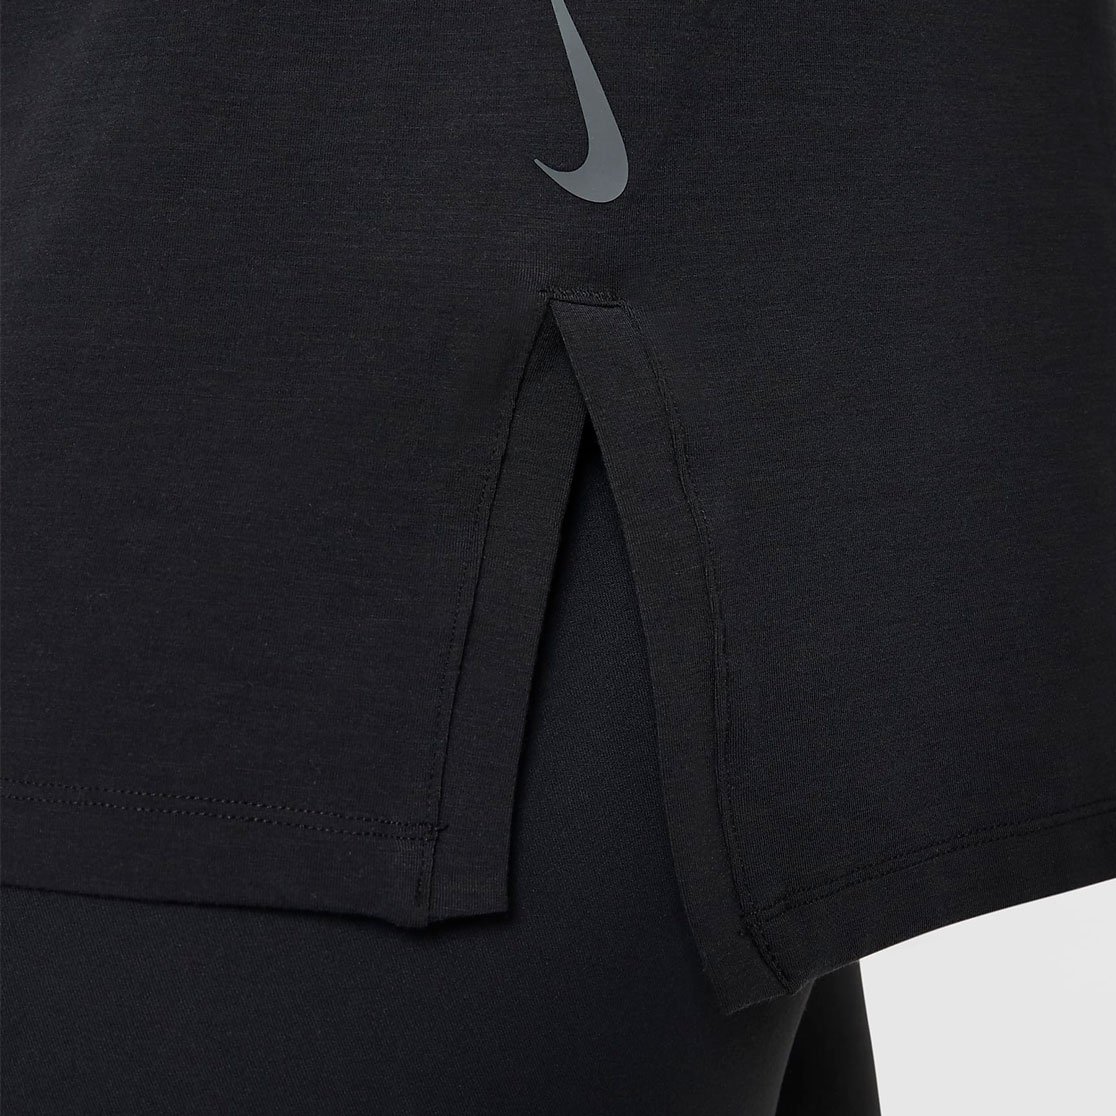 Мужская футболка с коротким рукавом Nike Yoga Dri-FIT